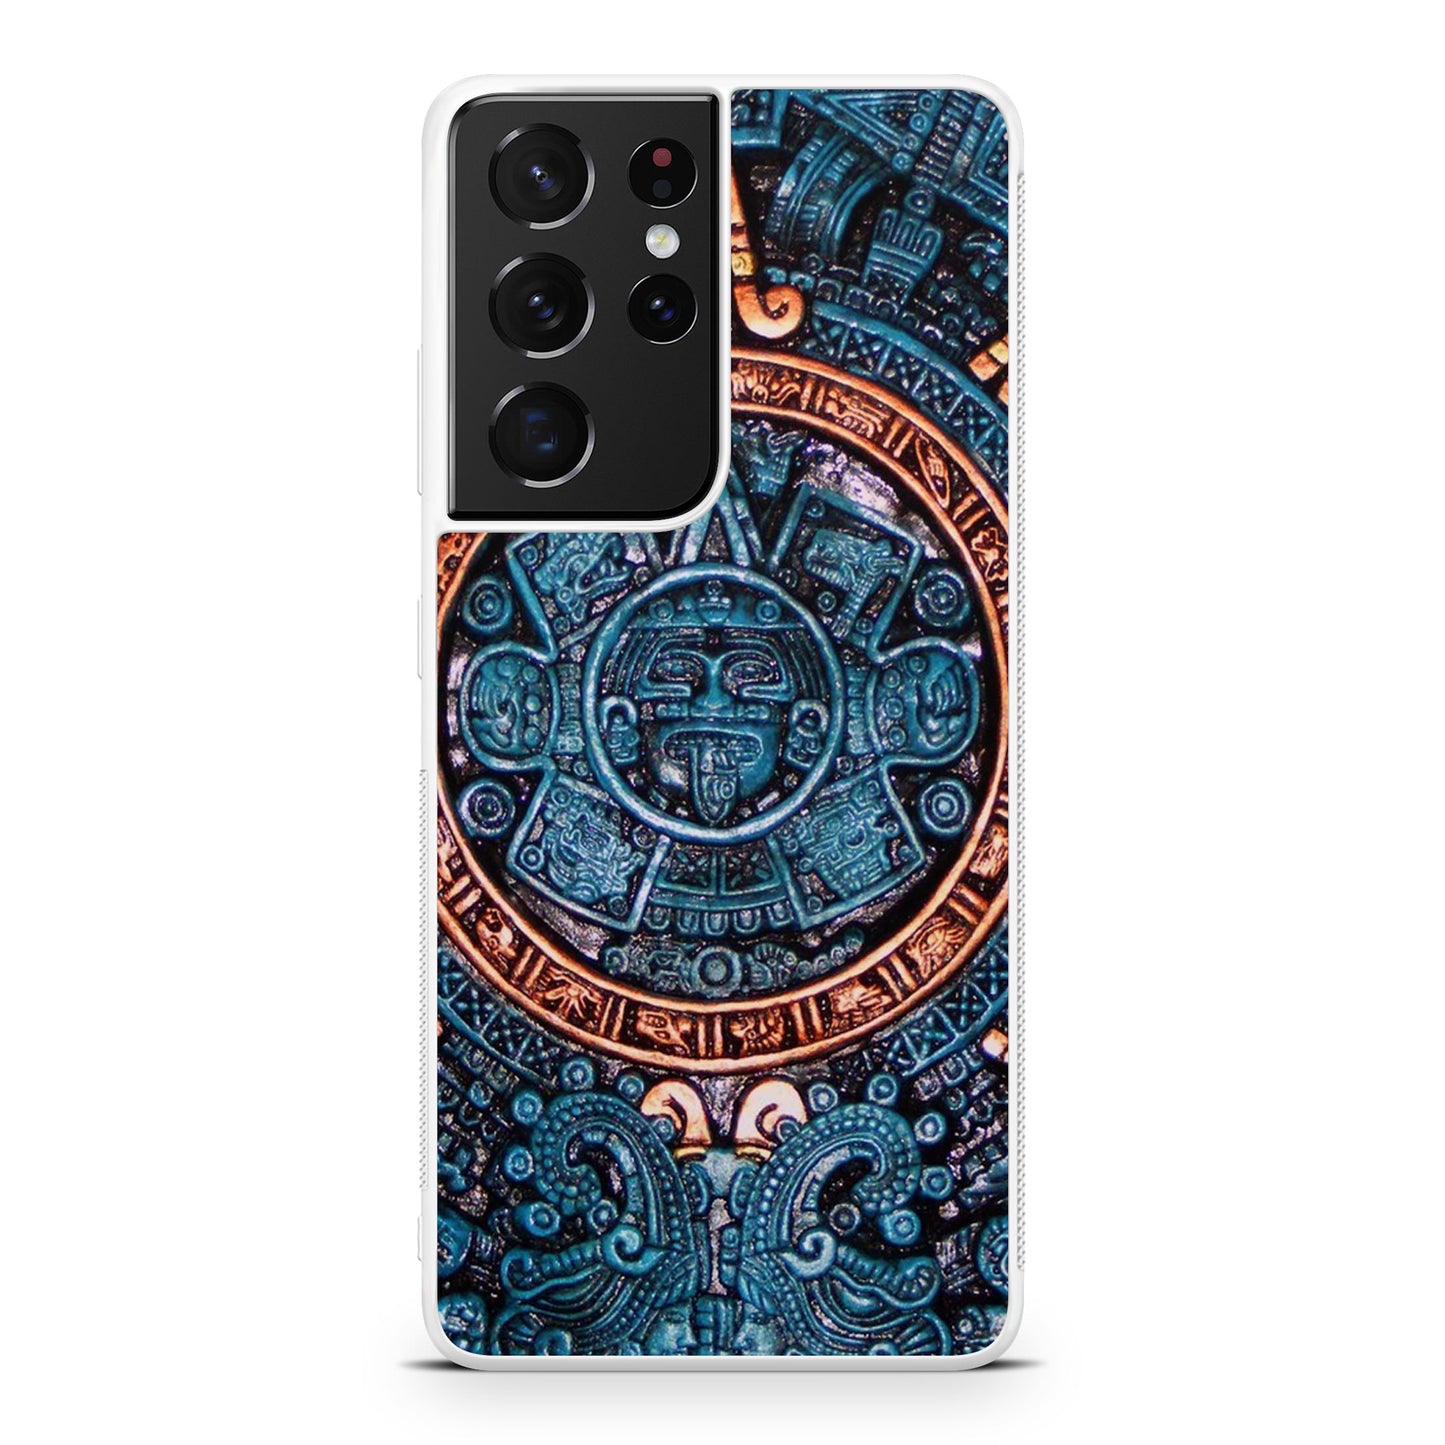 Aztec Calendar Galaxy S21 Ultra Case